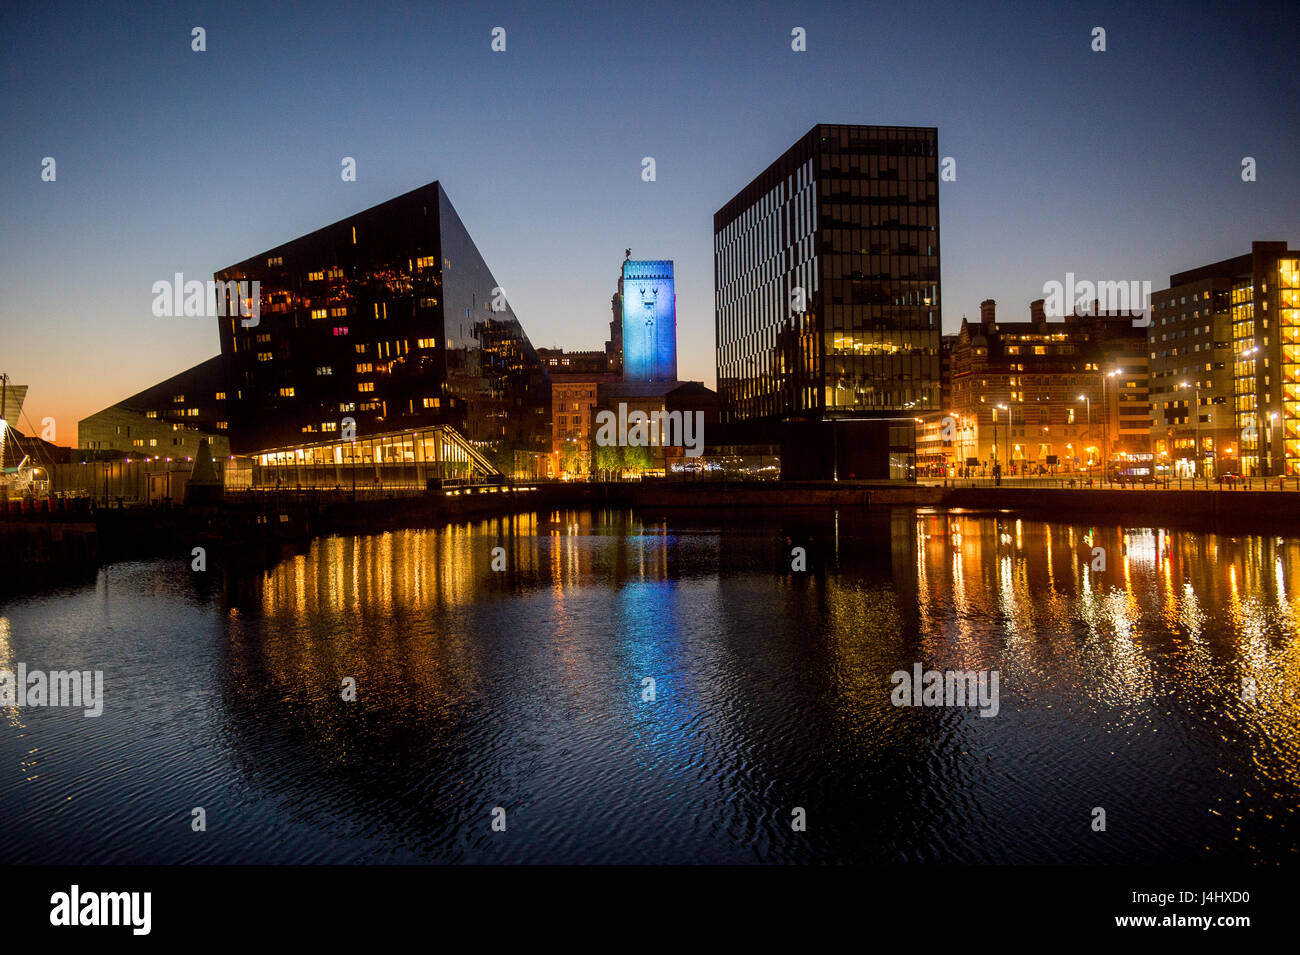 View of Liverpool Docks, Liverpool, England, UK Stock Photo